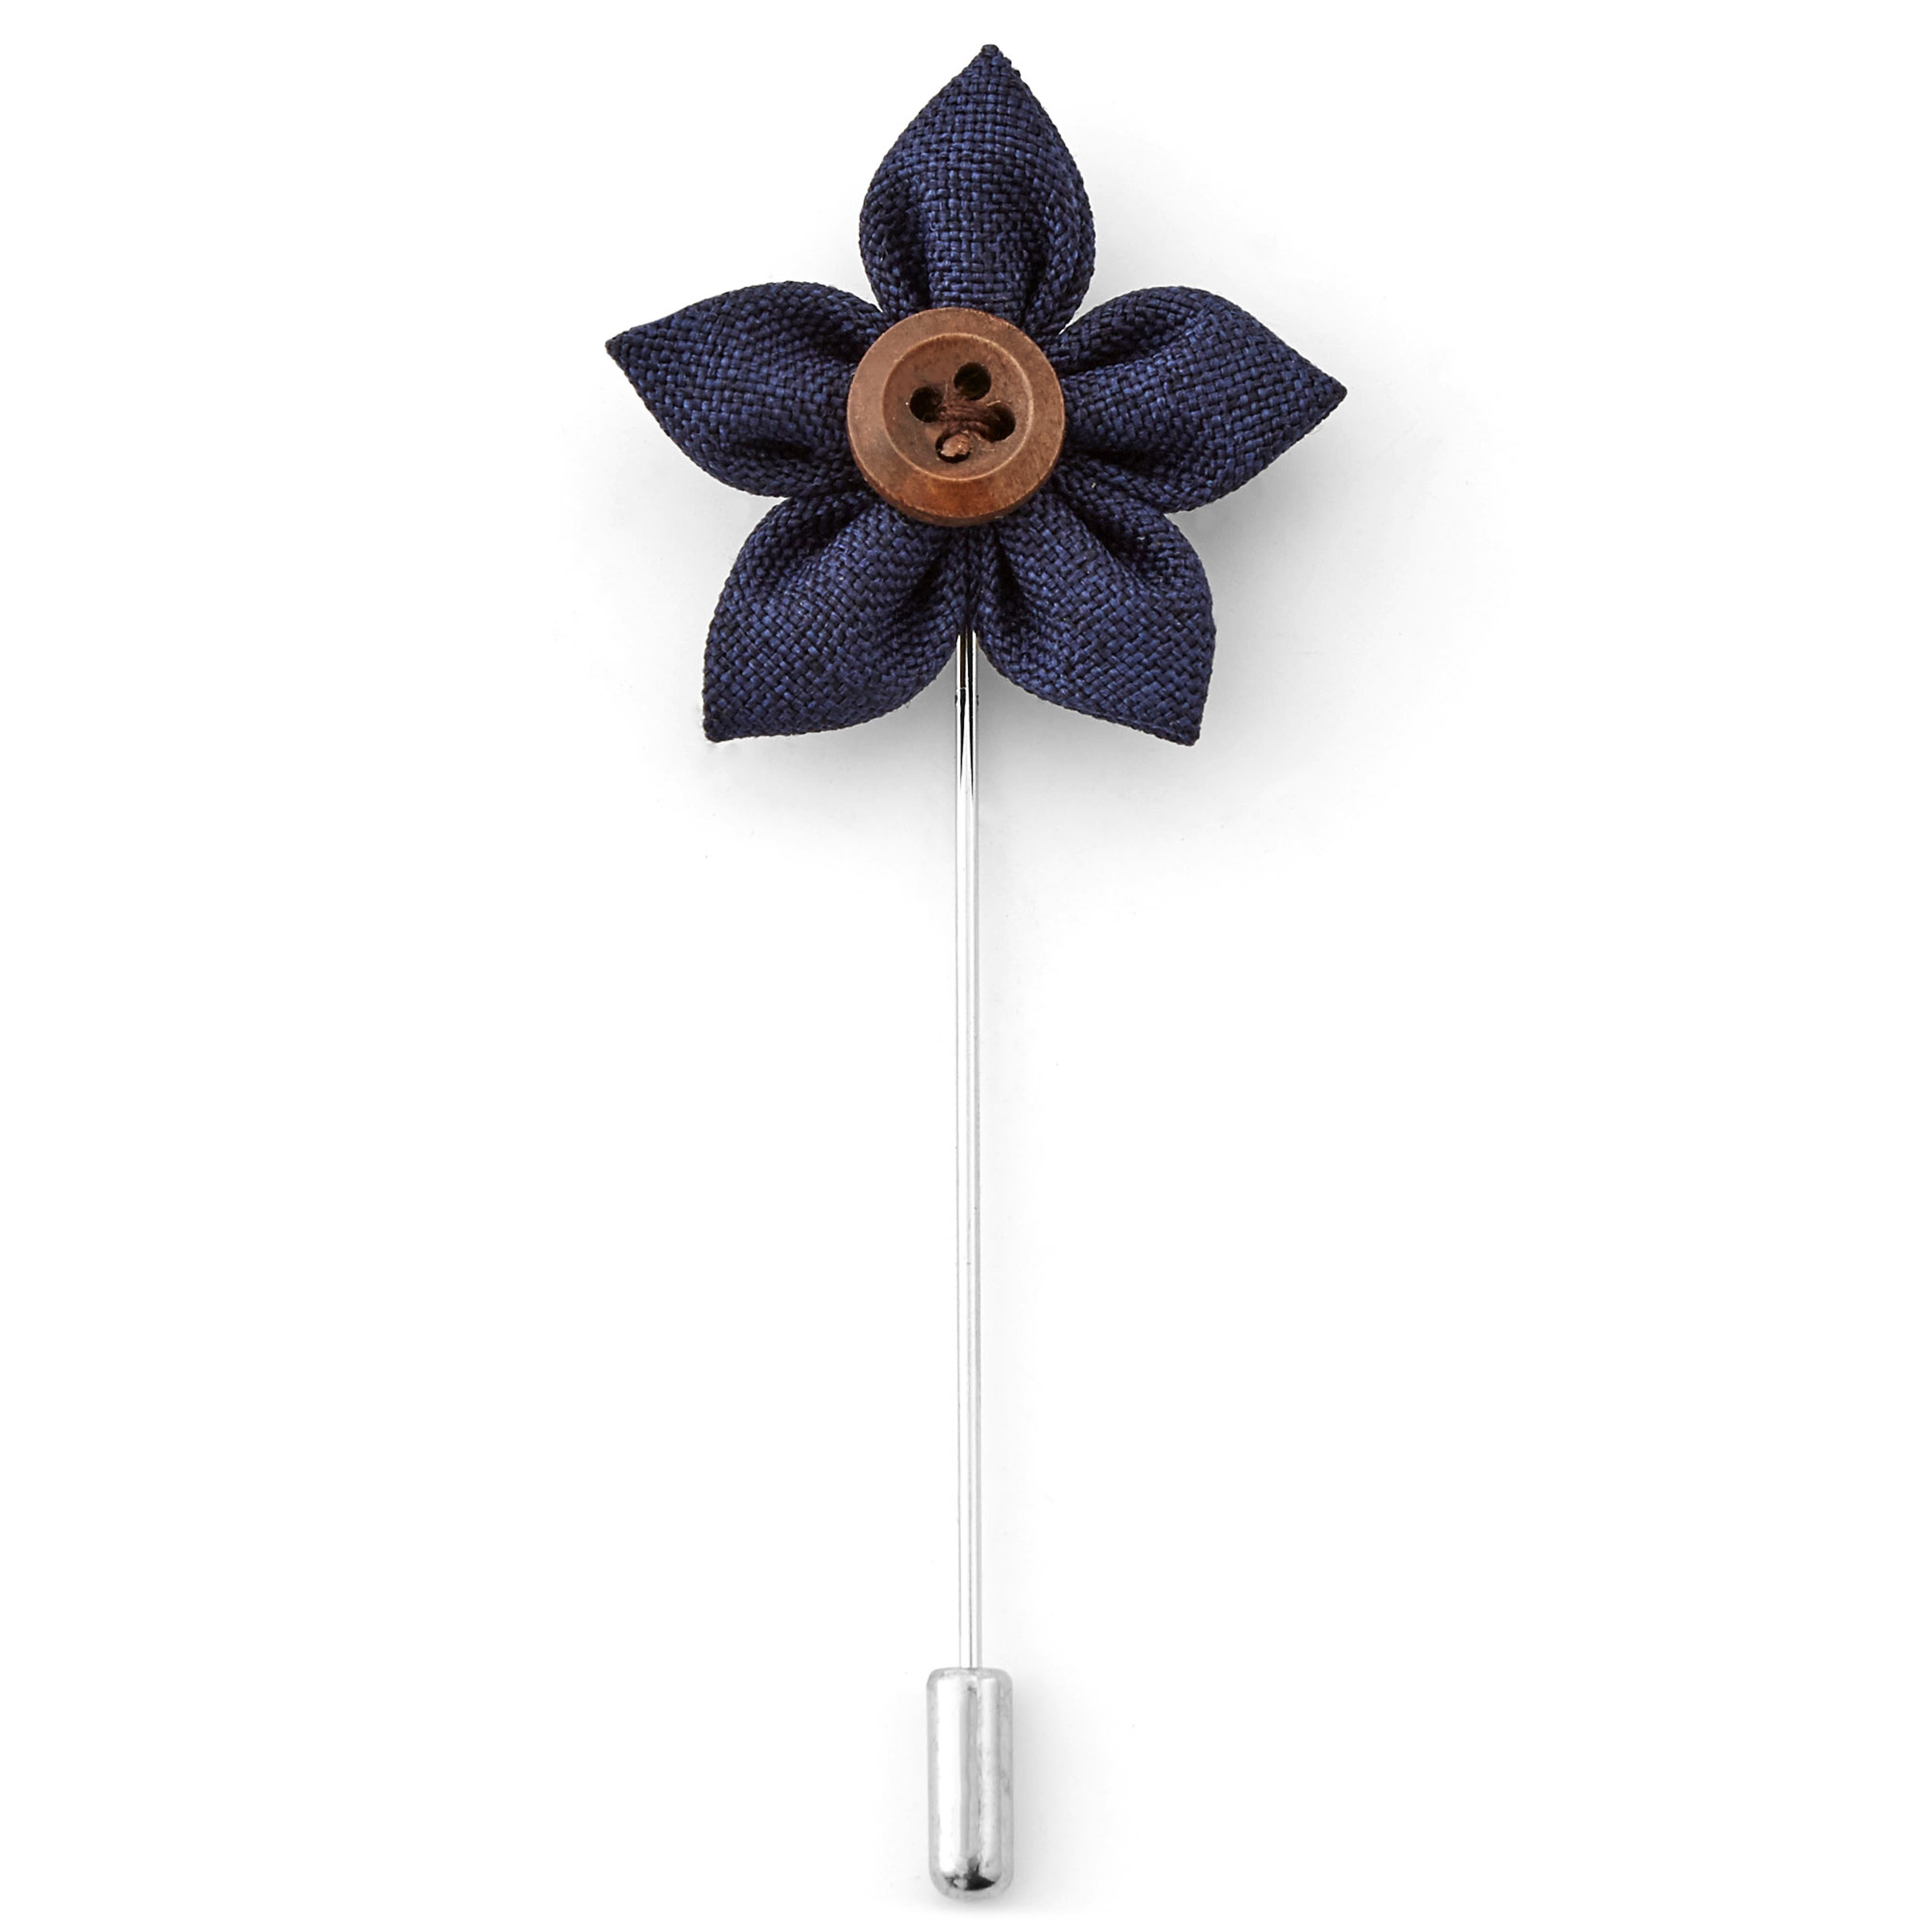 Navy Blue Buttoned Flower Lapel Pin